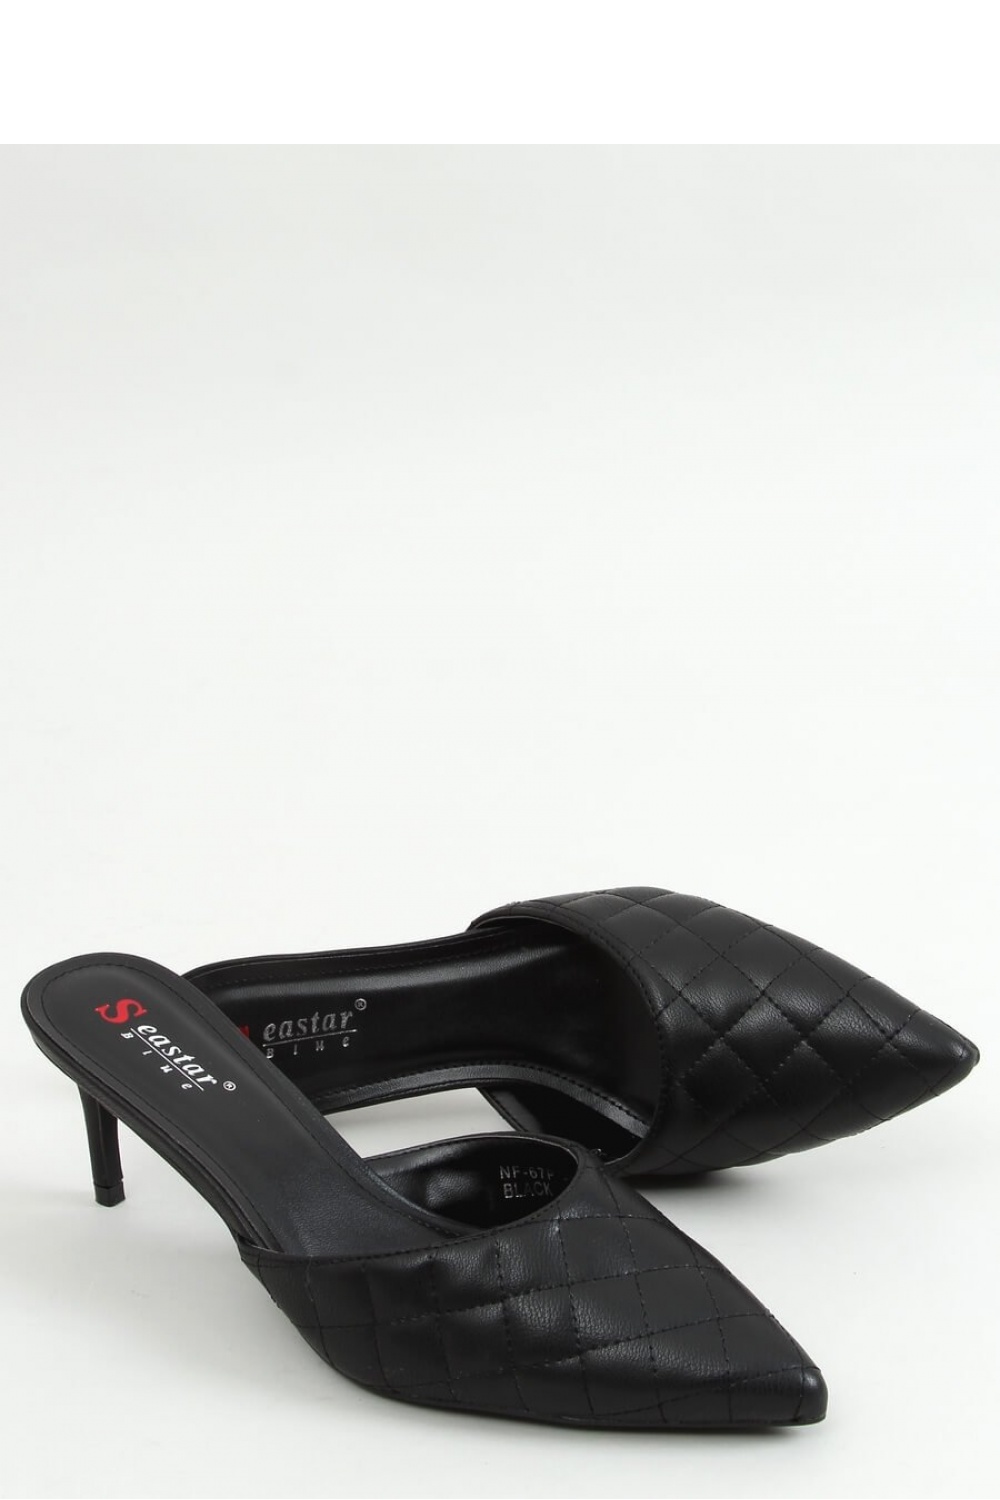  High heels model 155102 Inello  black